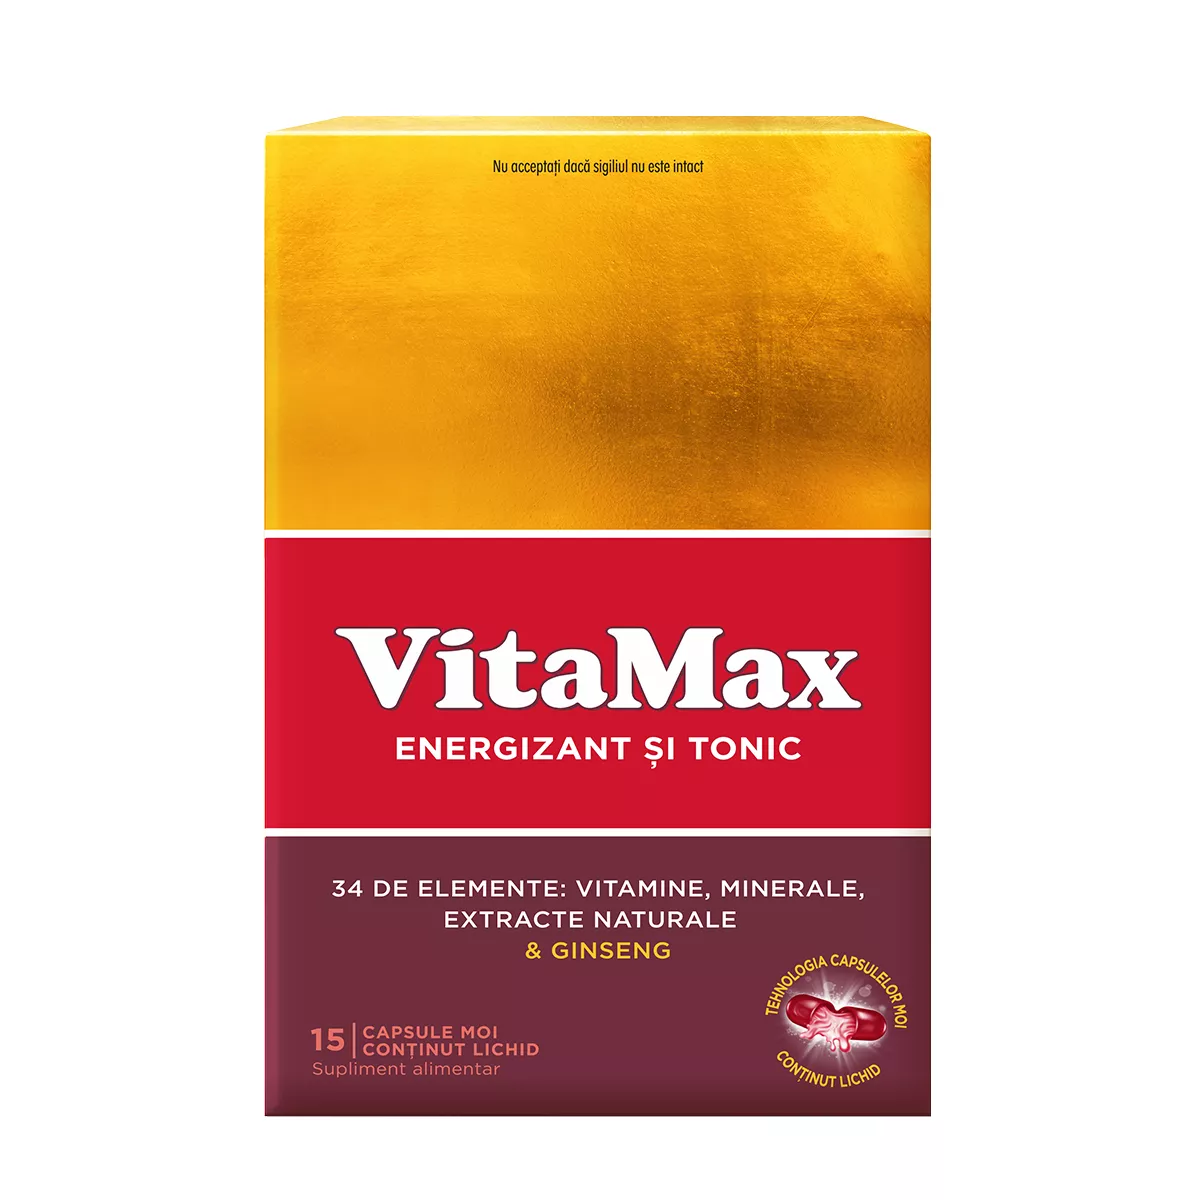 Vitamax x 15capsule moi, [],epastila.ro